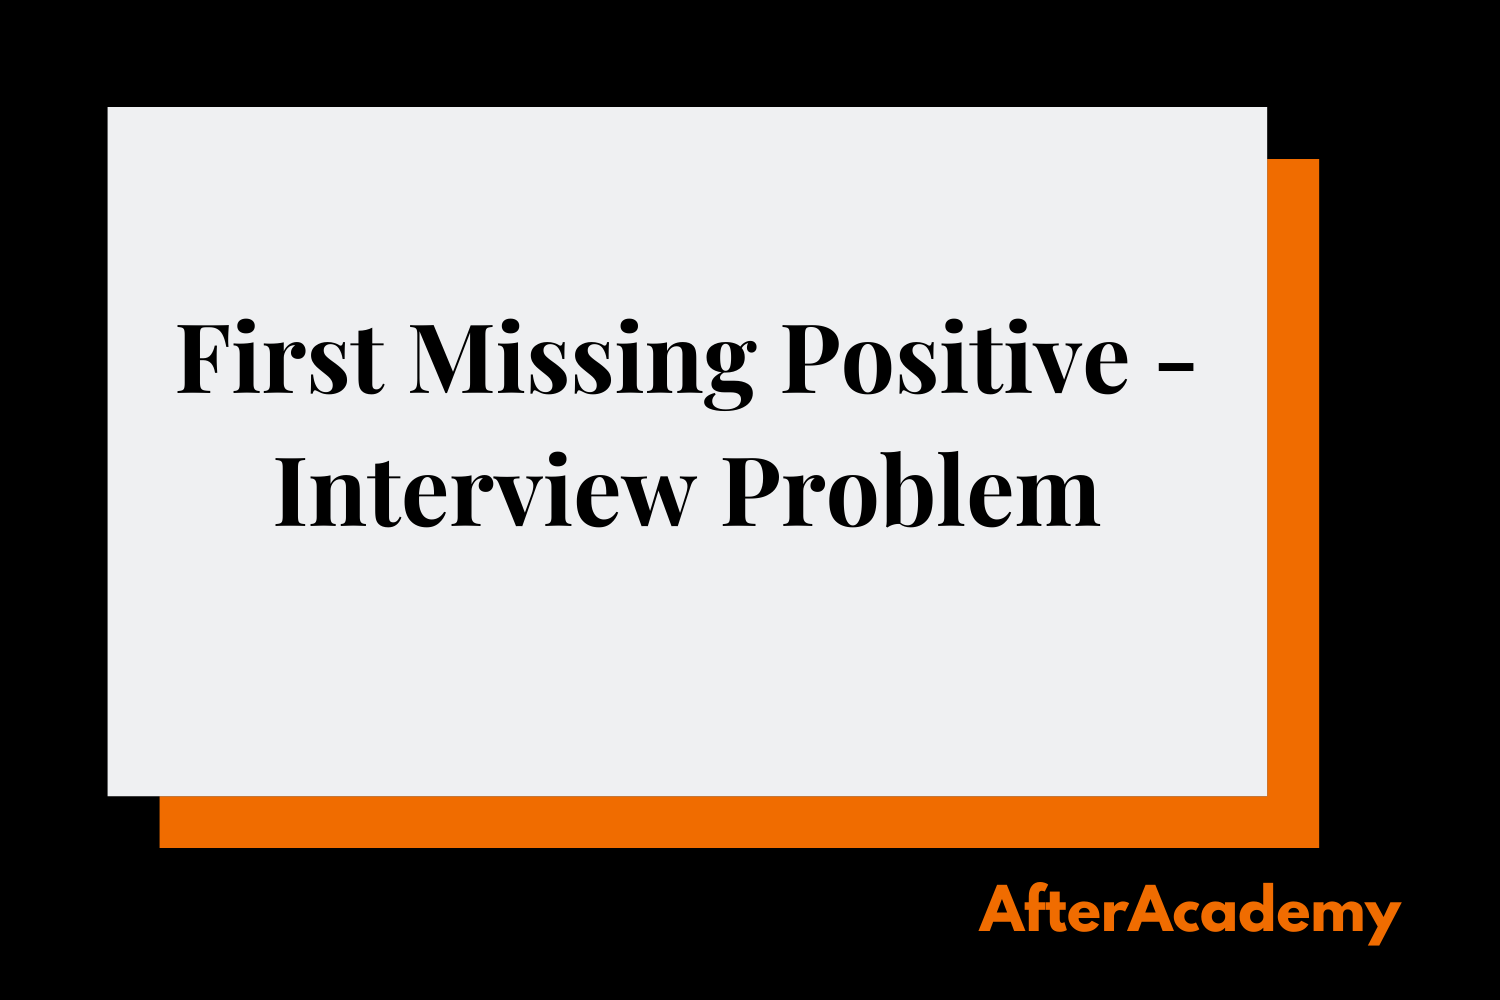 Find Missing Positive - Interview Problem